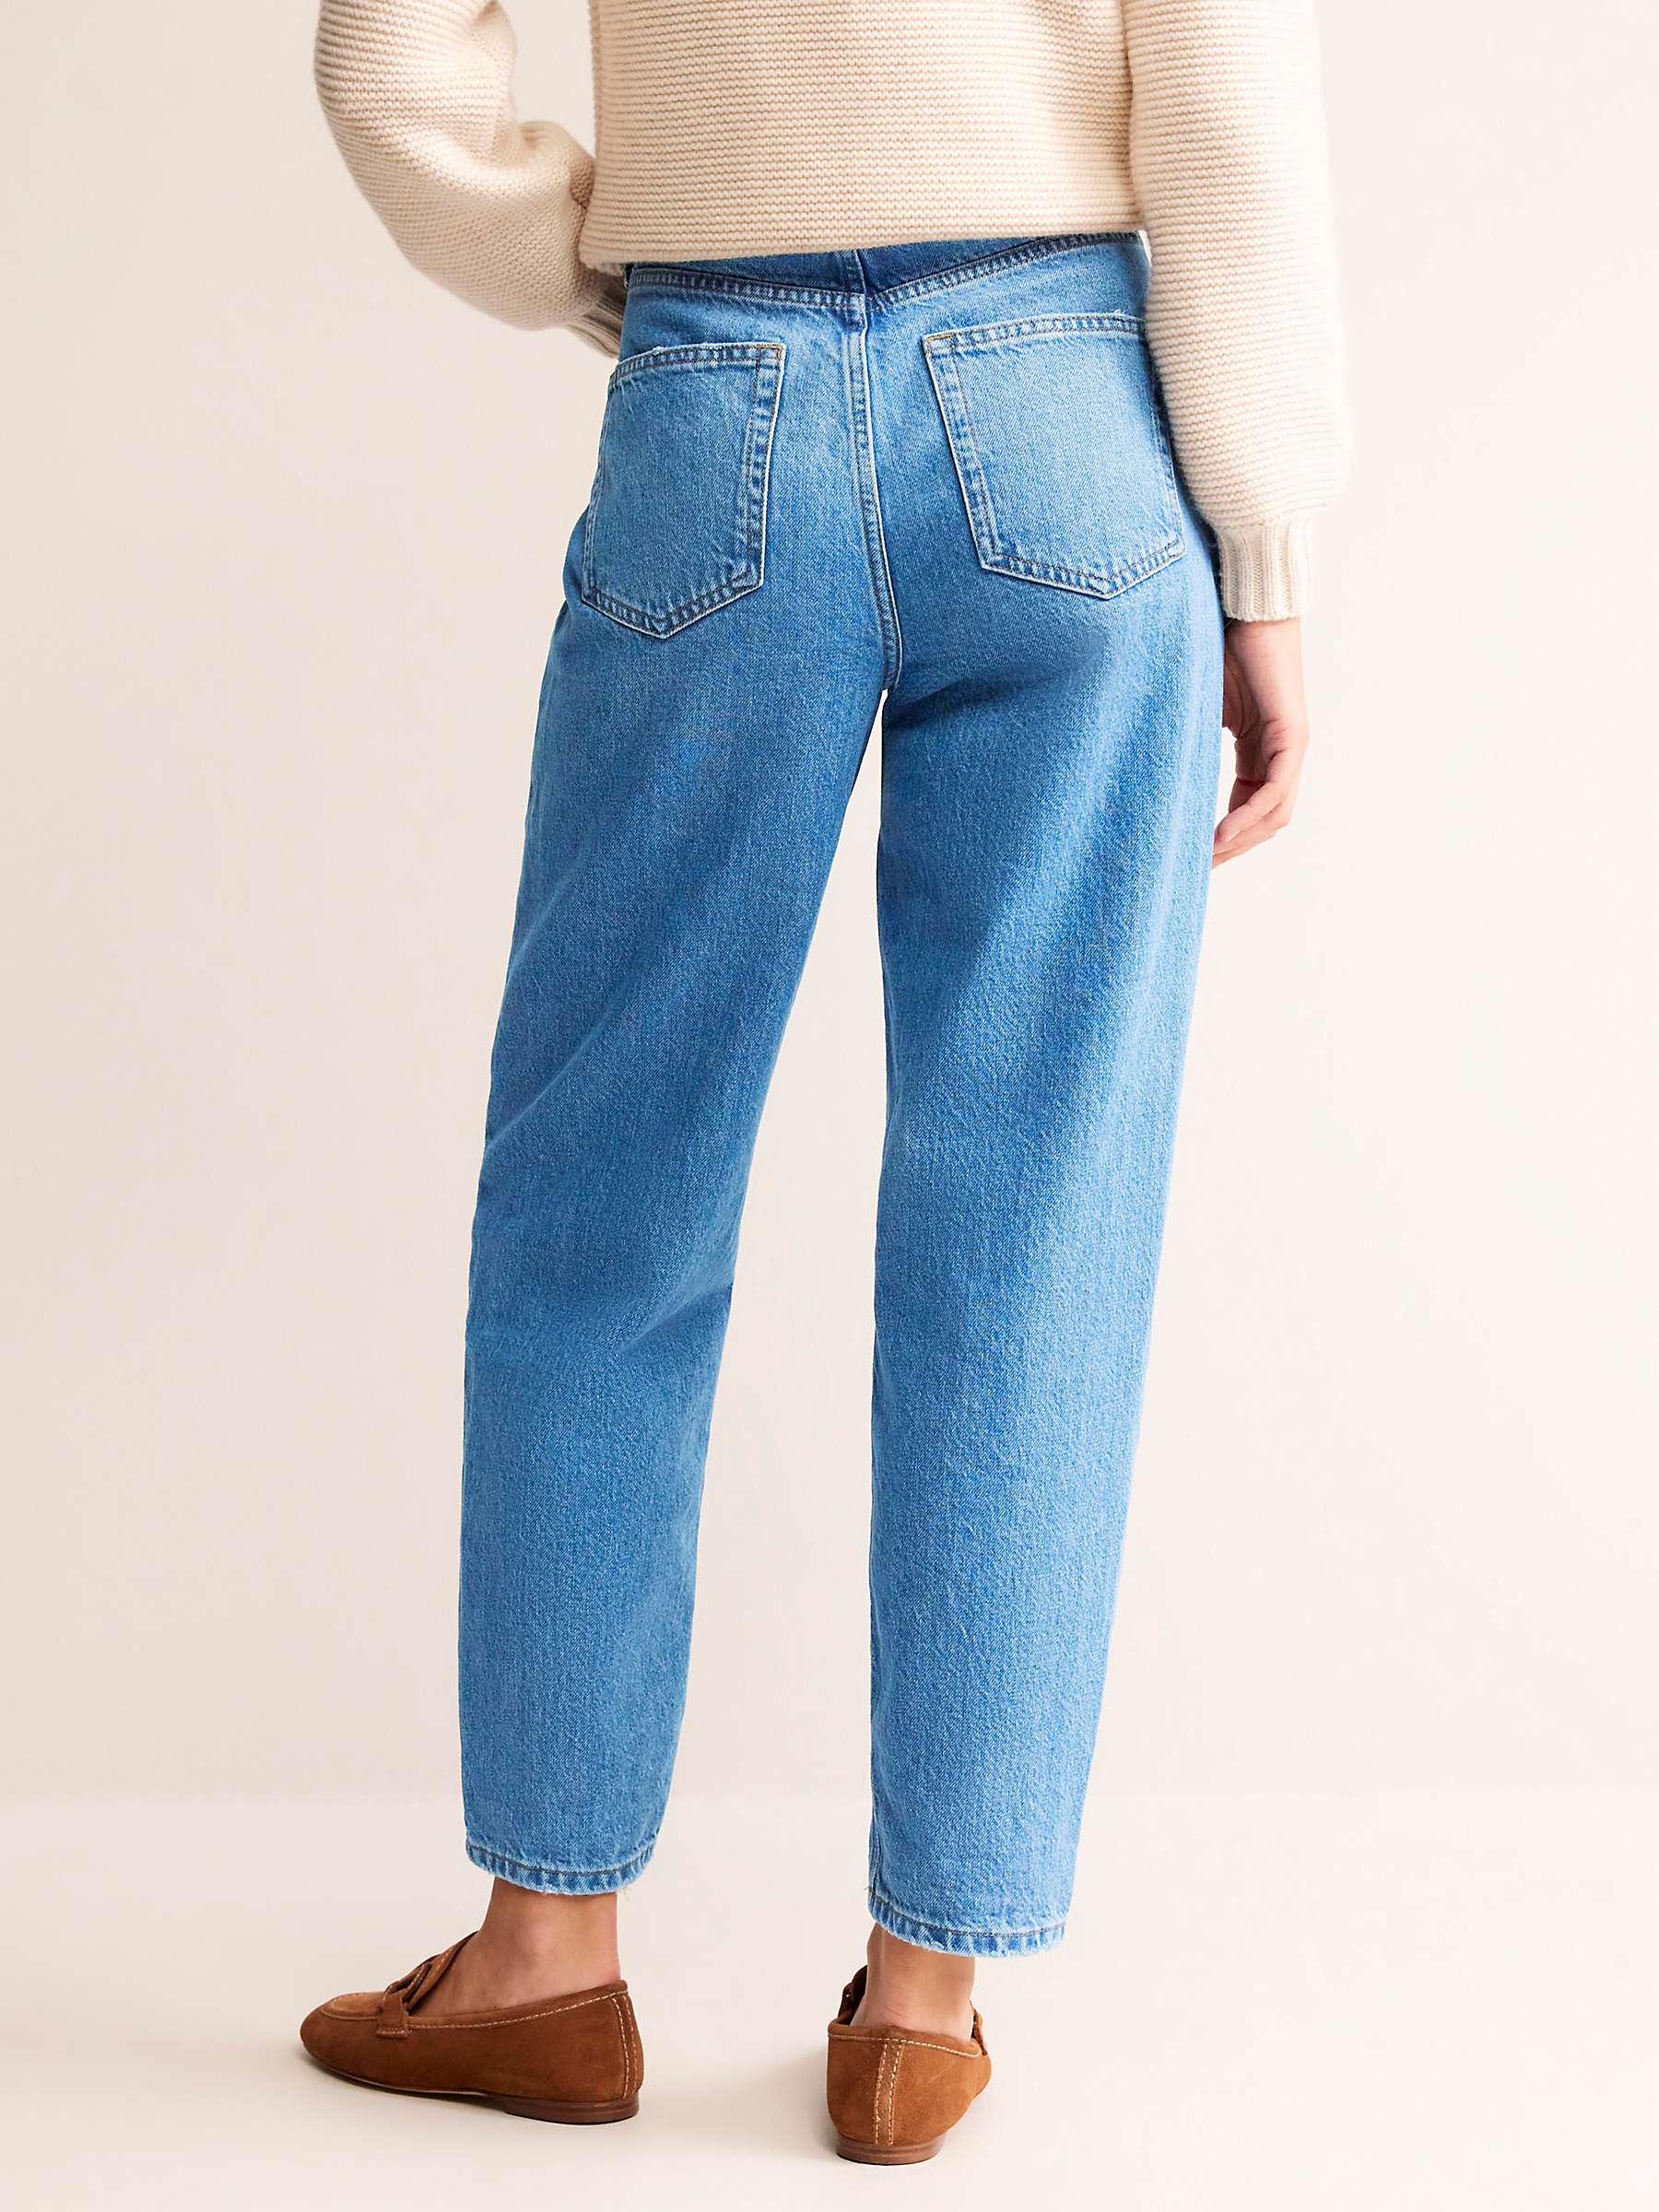 Buy Boden High Rise Tapered Jeans, Mid Vintage Online at johnlewis.com